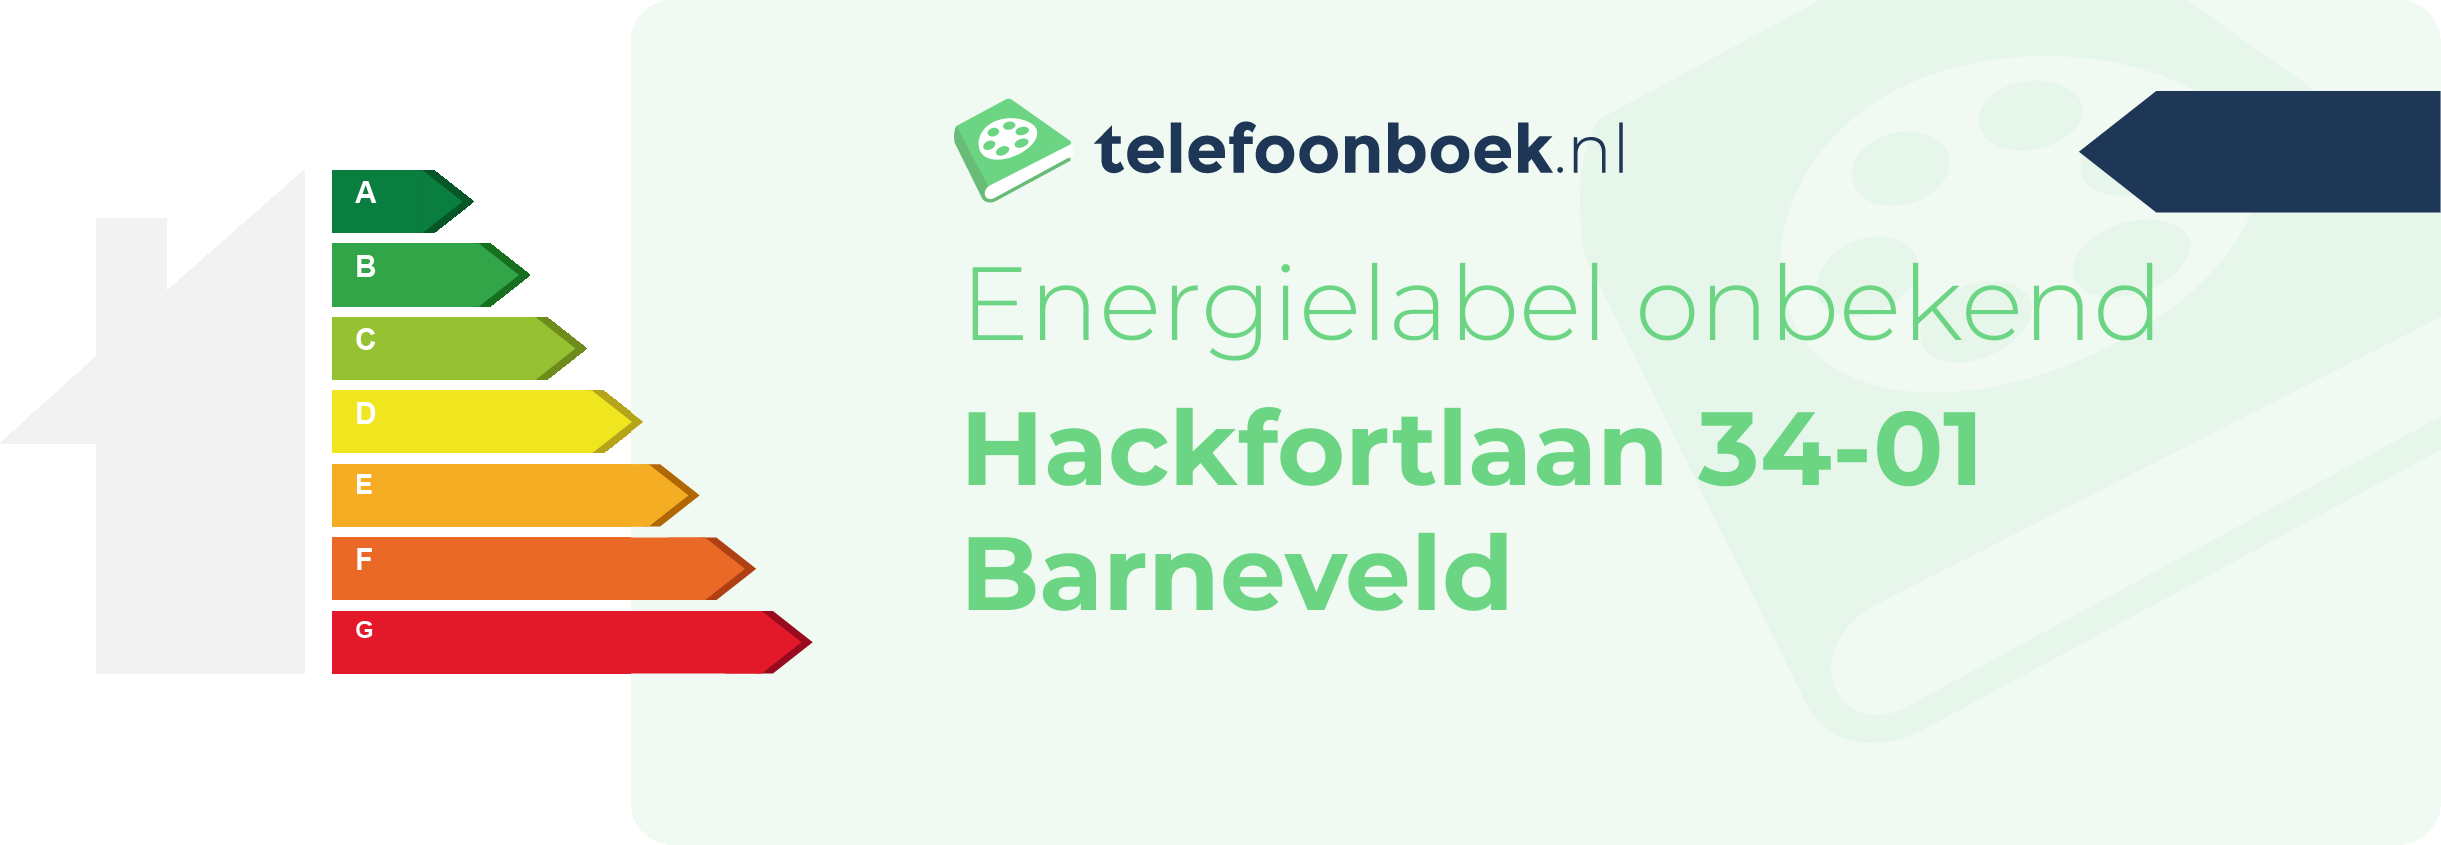 Energielabel Hackfortlaan 34-01 Barneveld